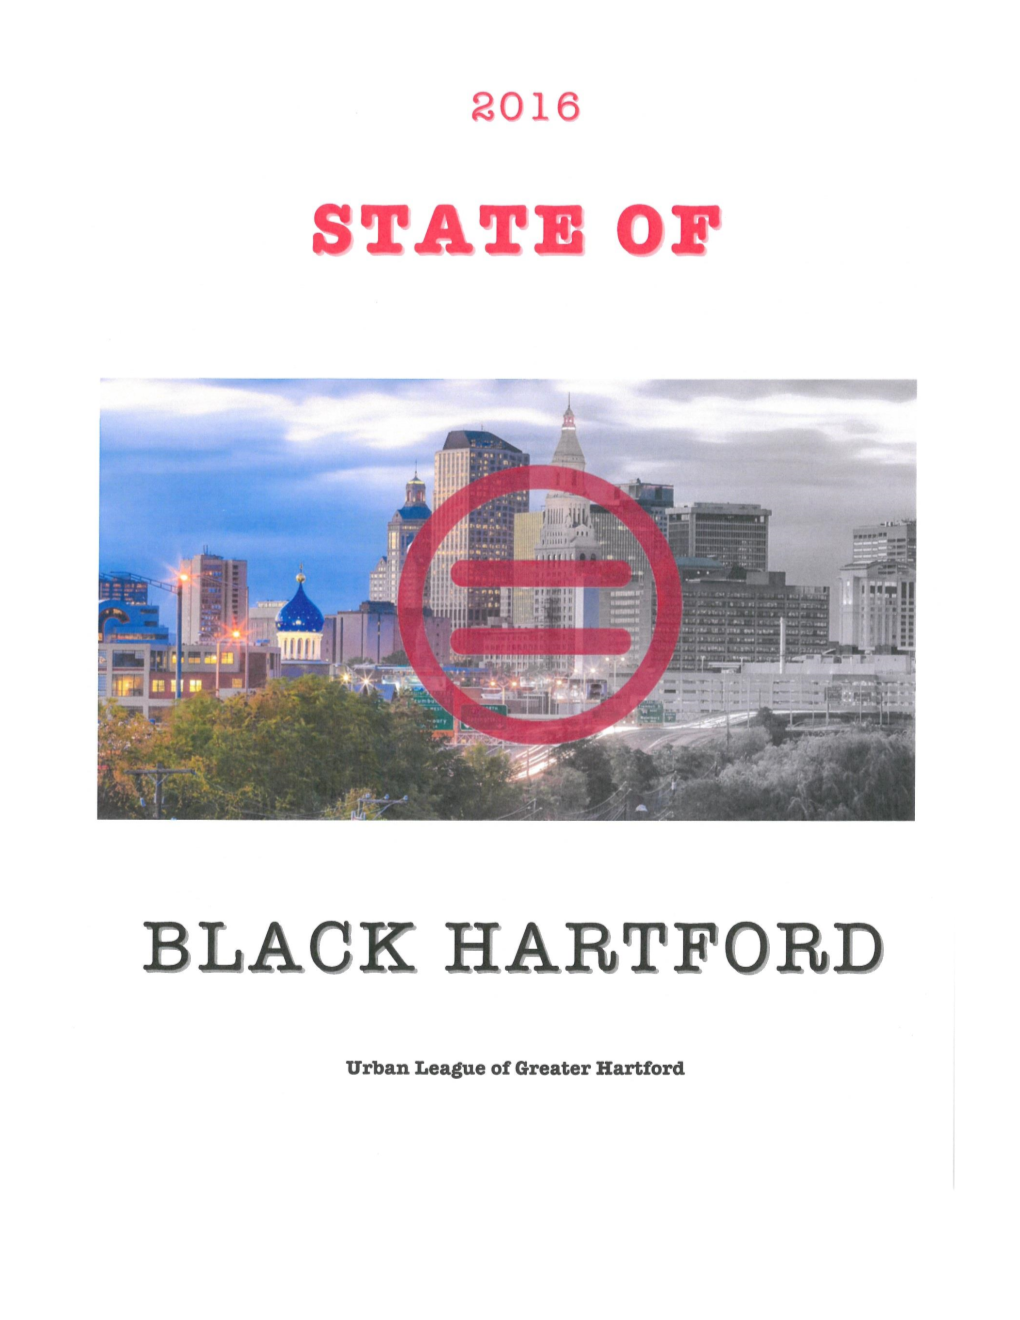 The State of Black Hartford 2016